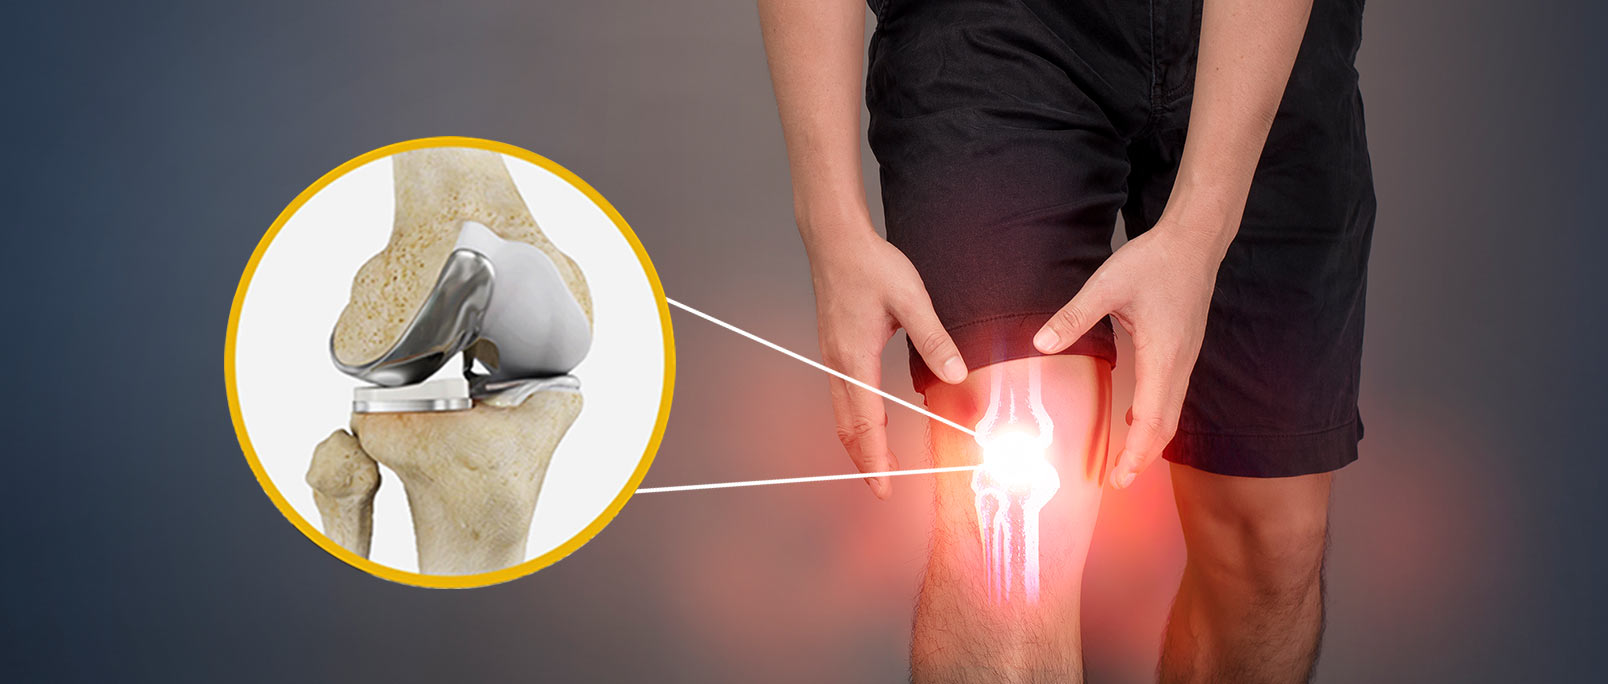 partial-robotic-knee-replacement